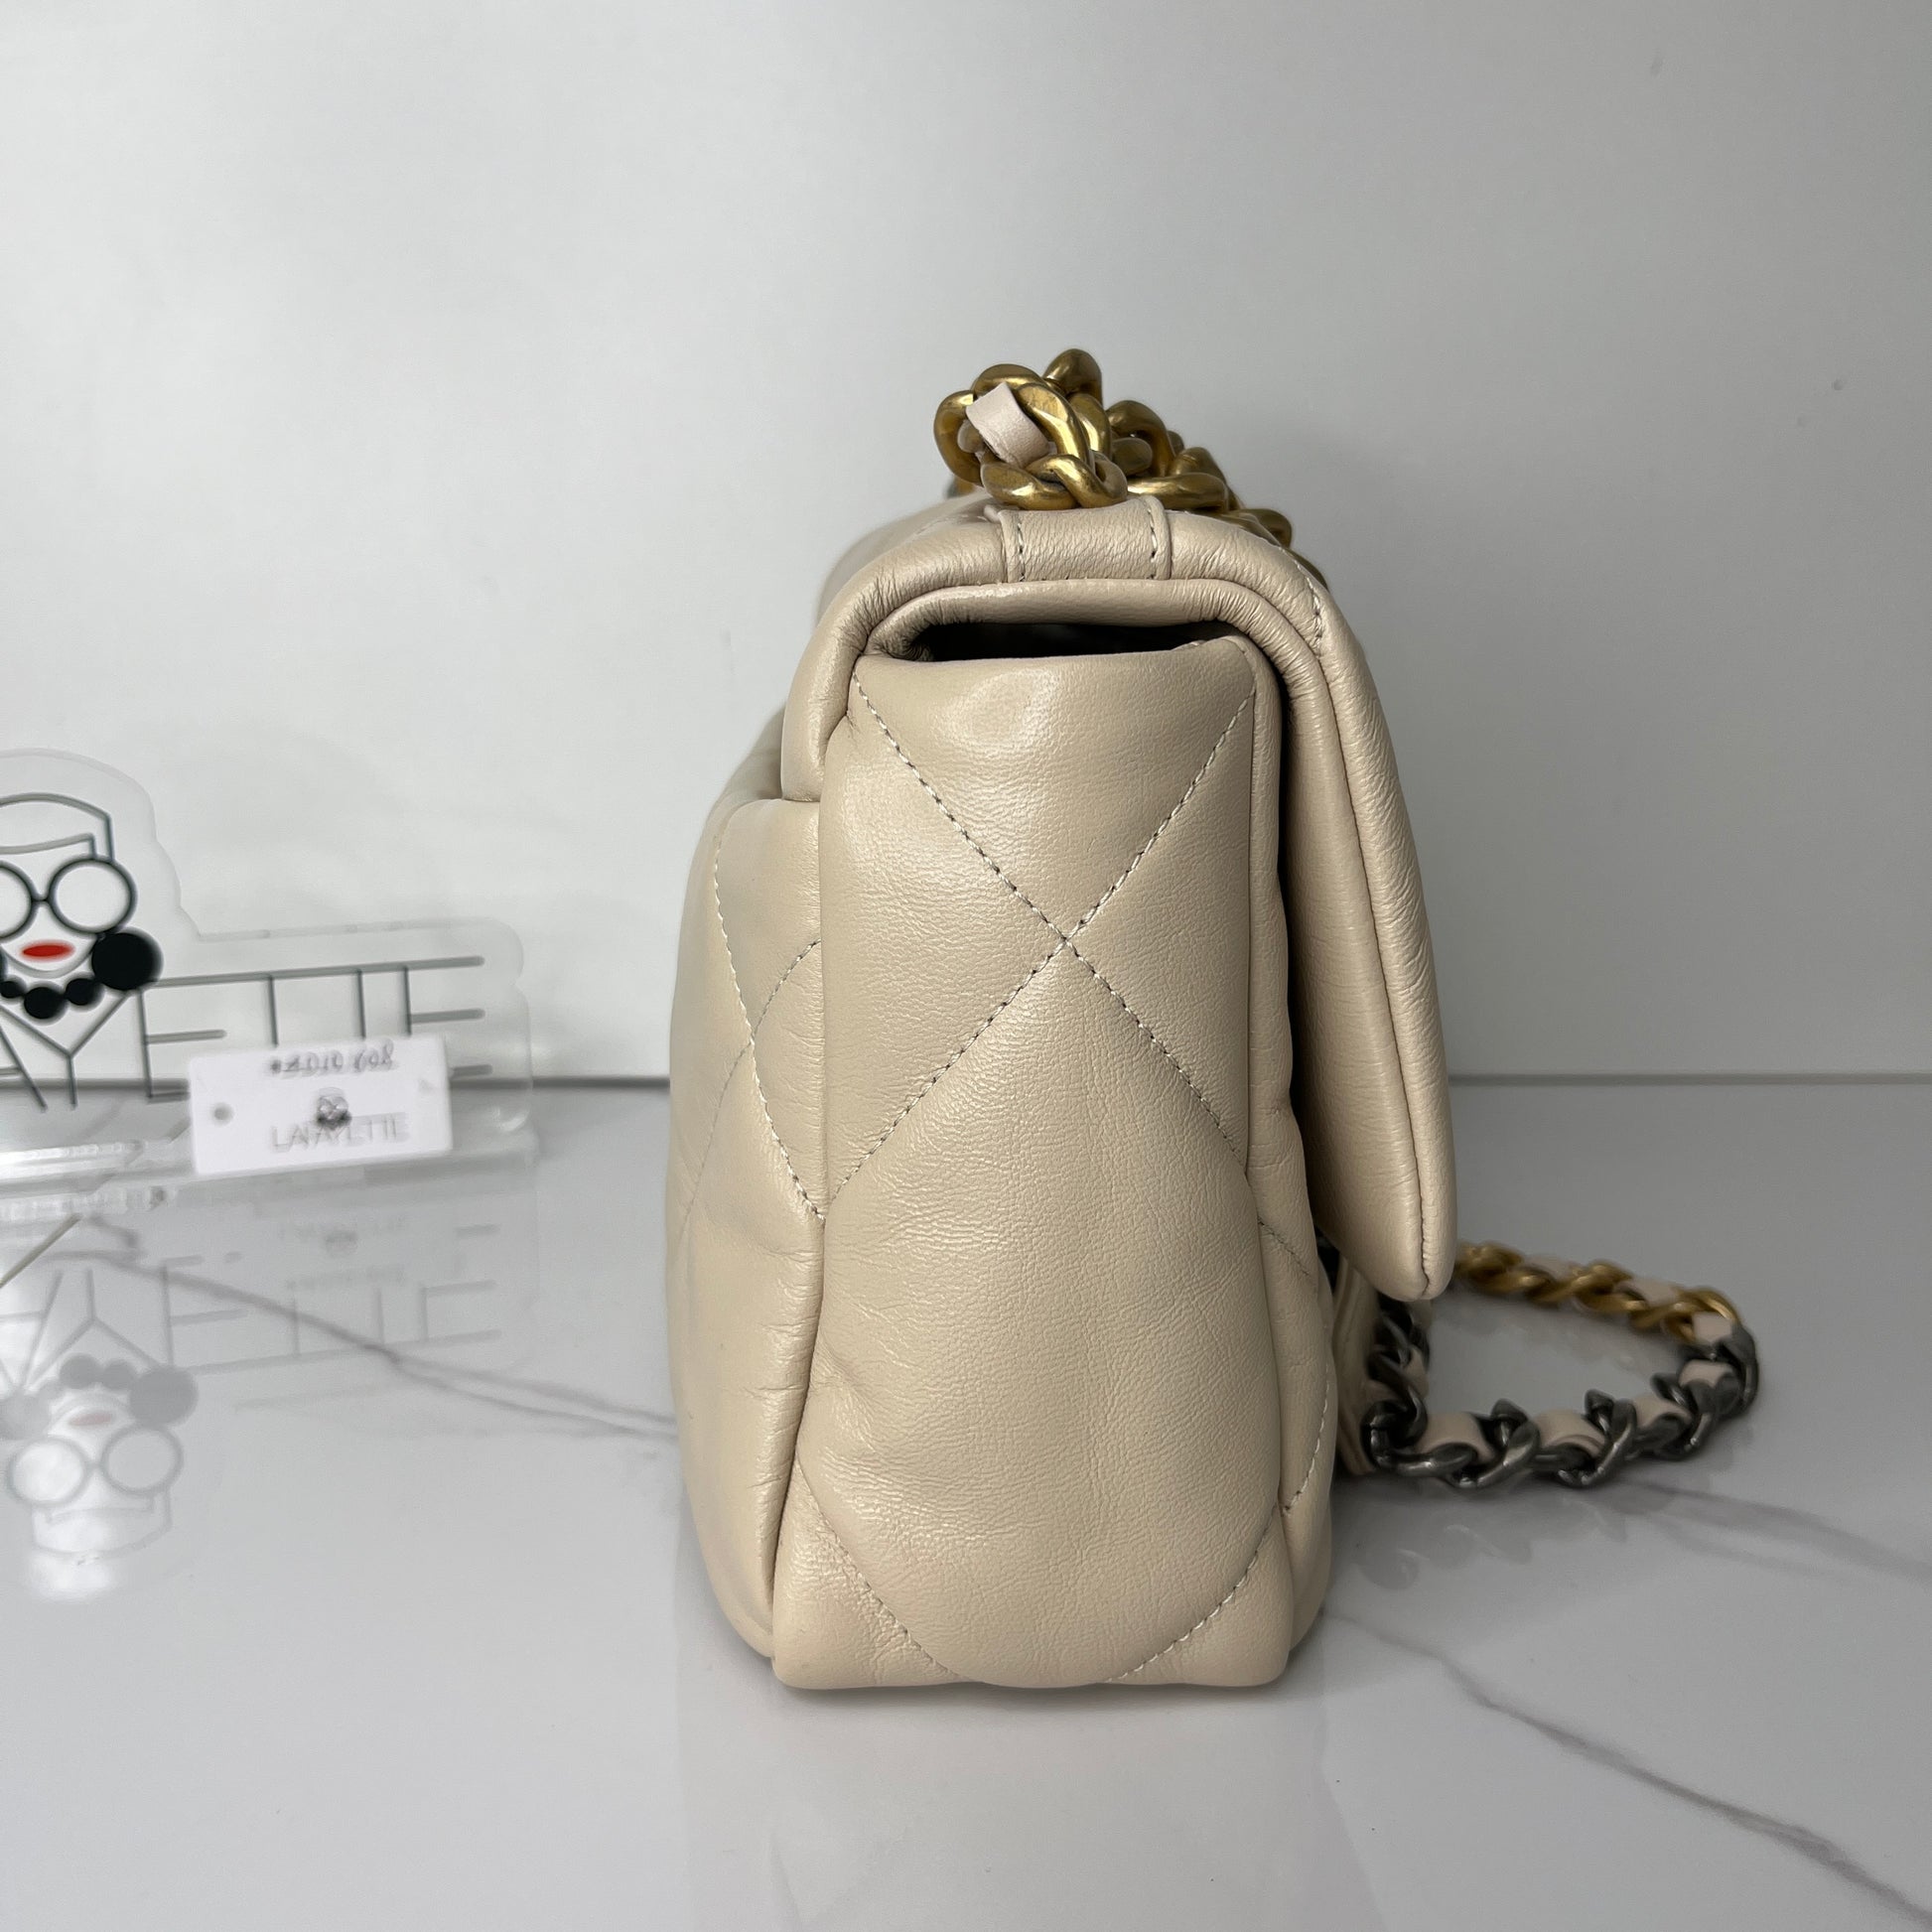 Chanel 19 Handbag - Lafayette Consignment